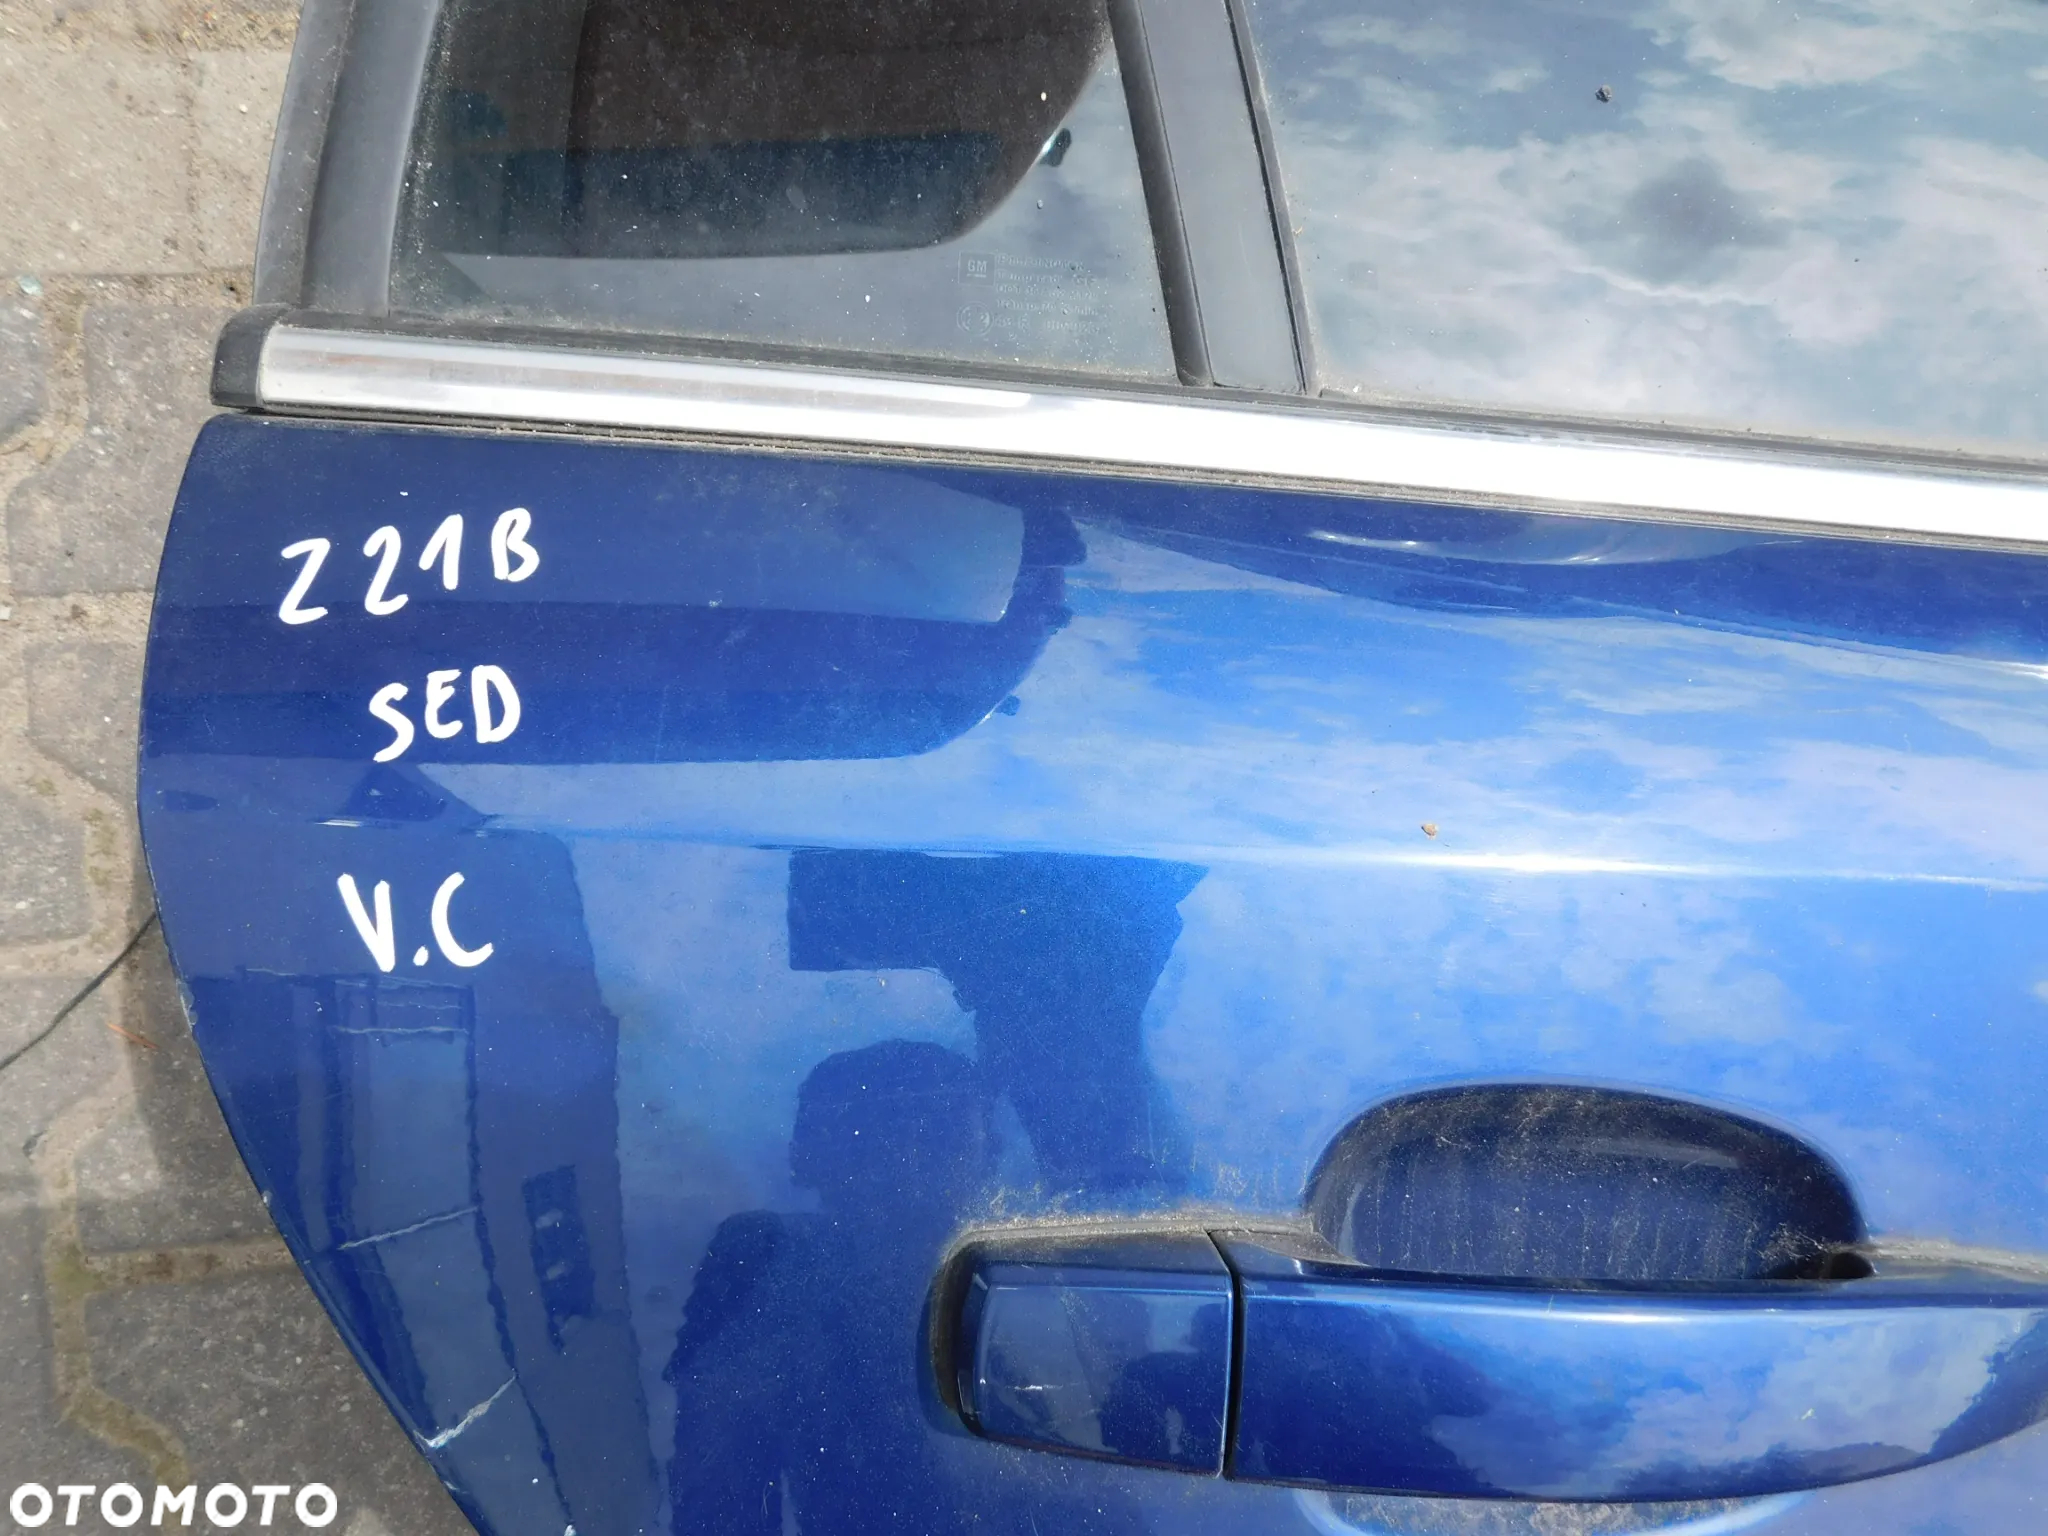 drzwi tył prawe OPEL VECTRA C Z21b sedan  kompletne - 2